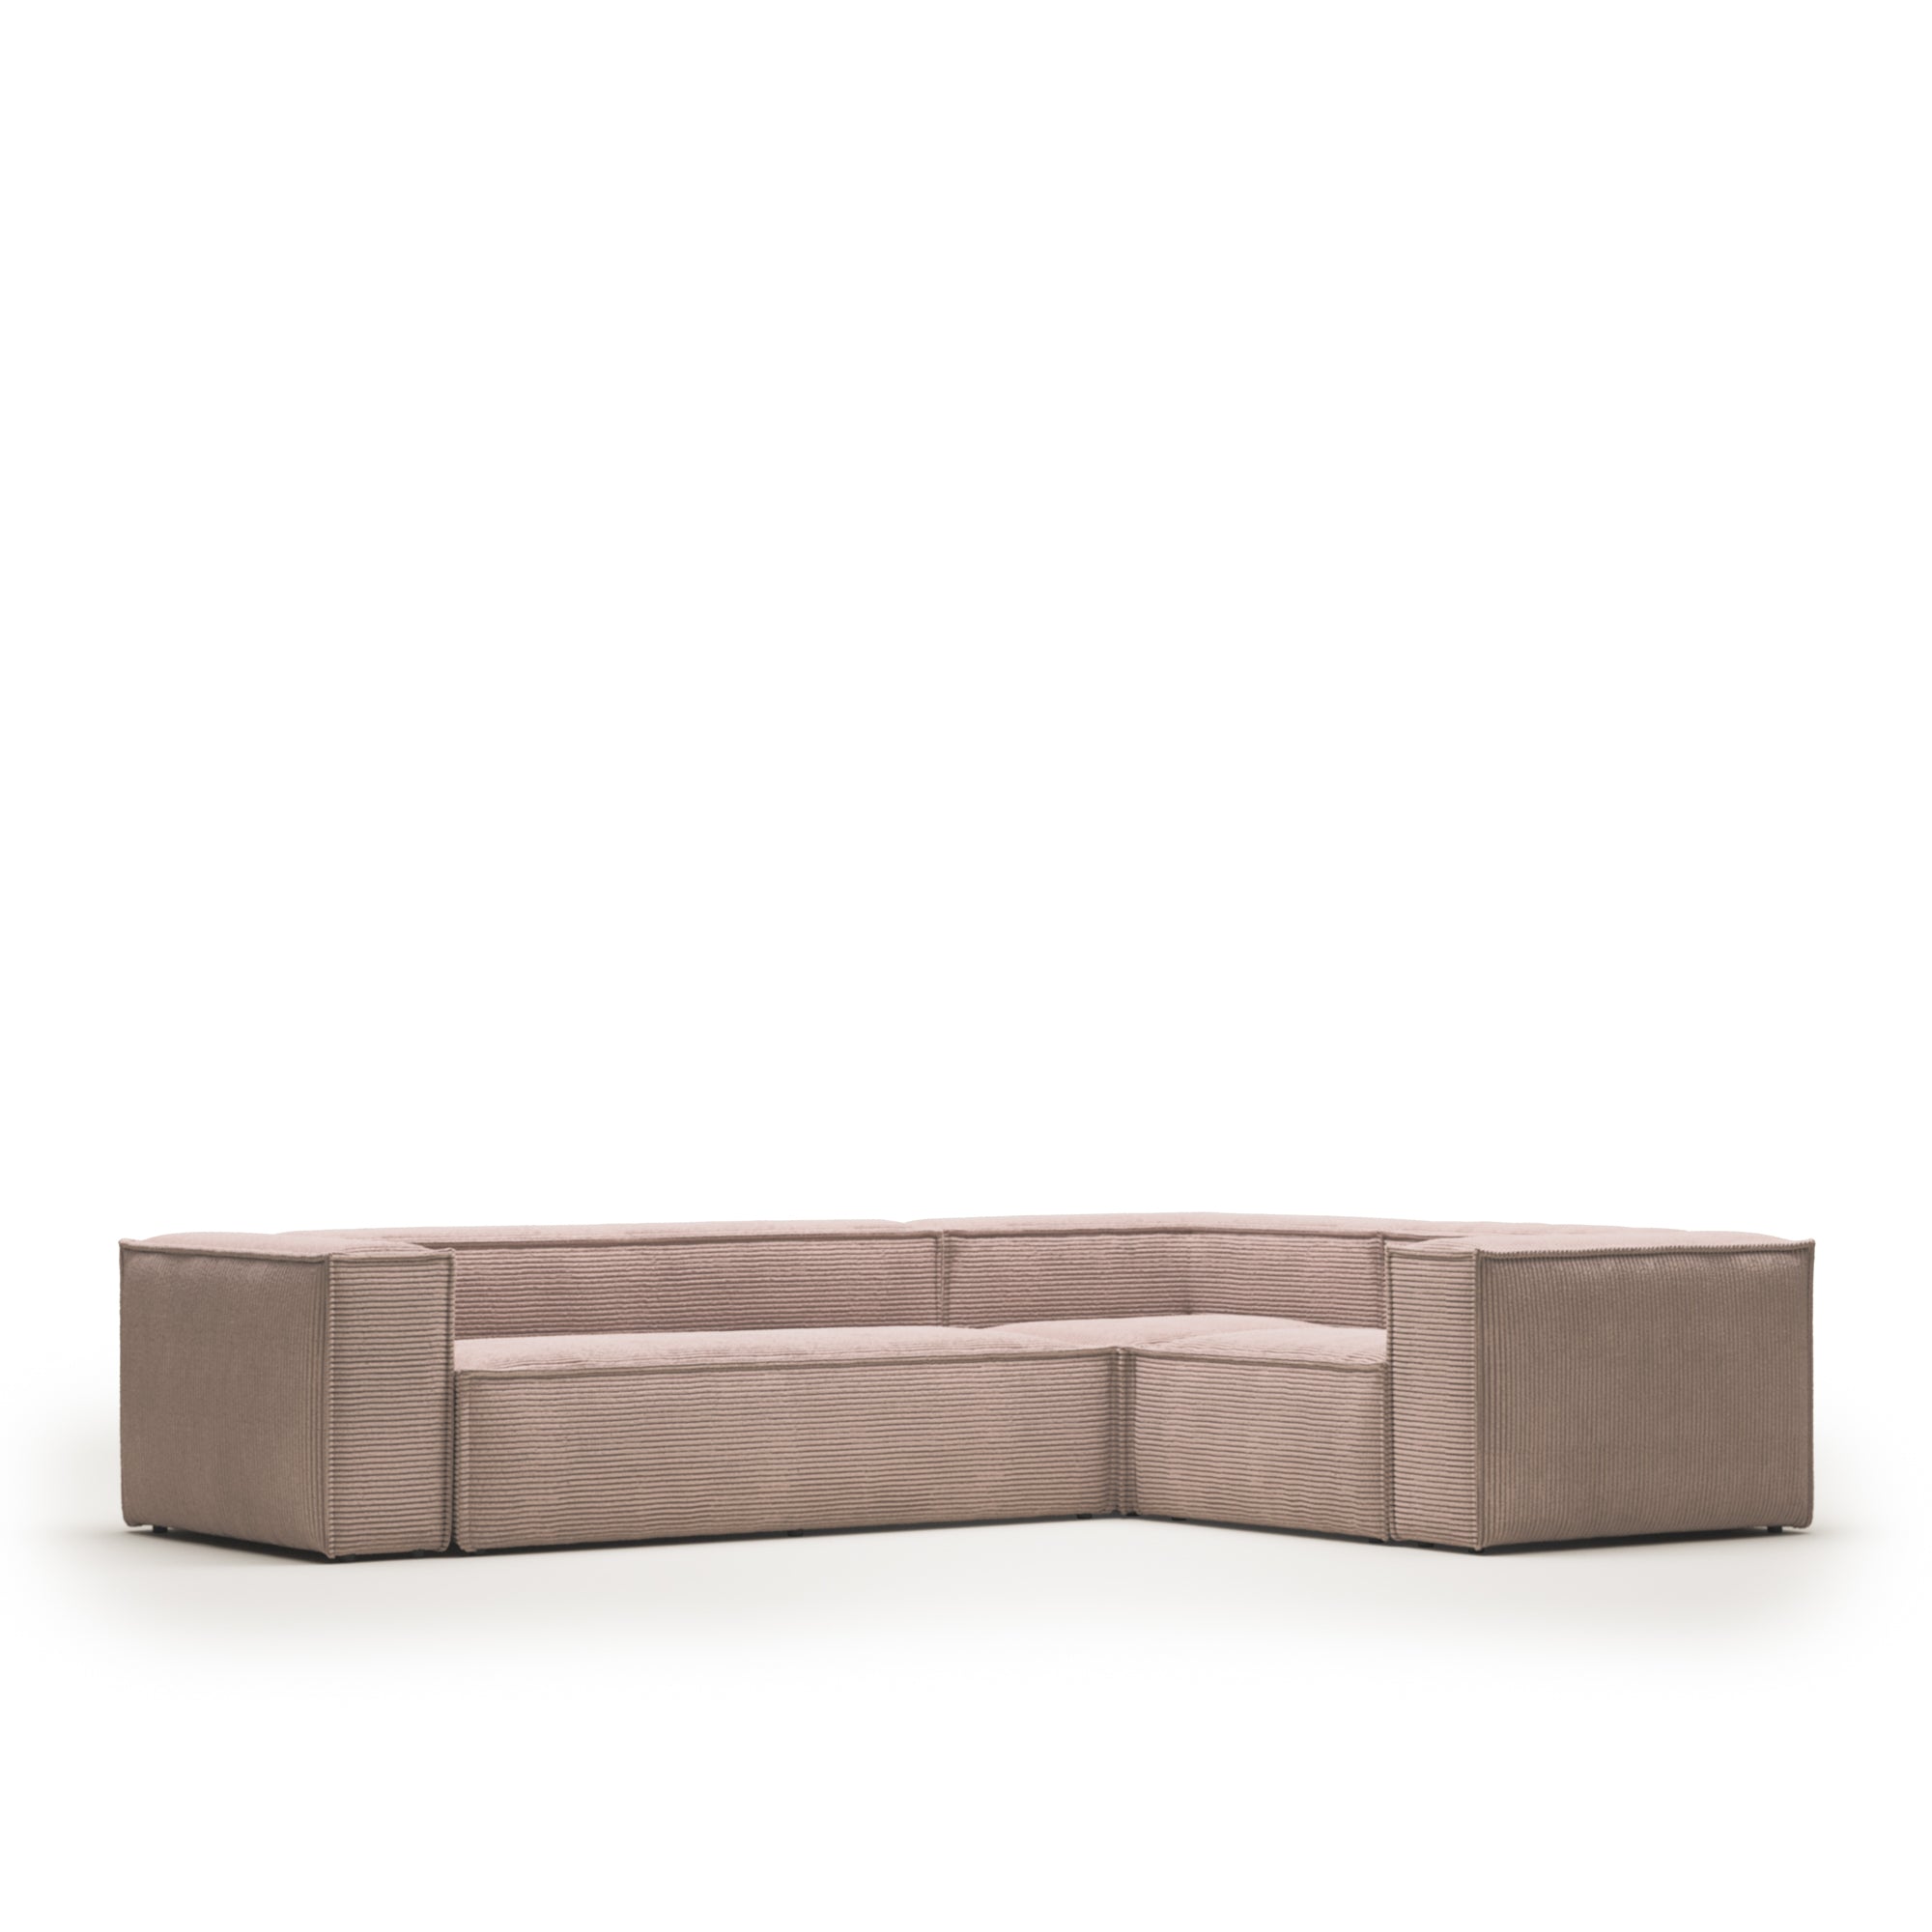 Blok 4 seater corner sofa in pink wide seam corduroy, 320 x 230 cm / 230 x 320 cm